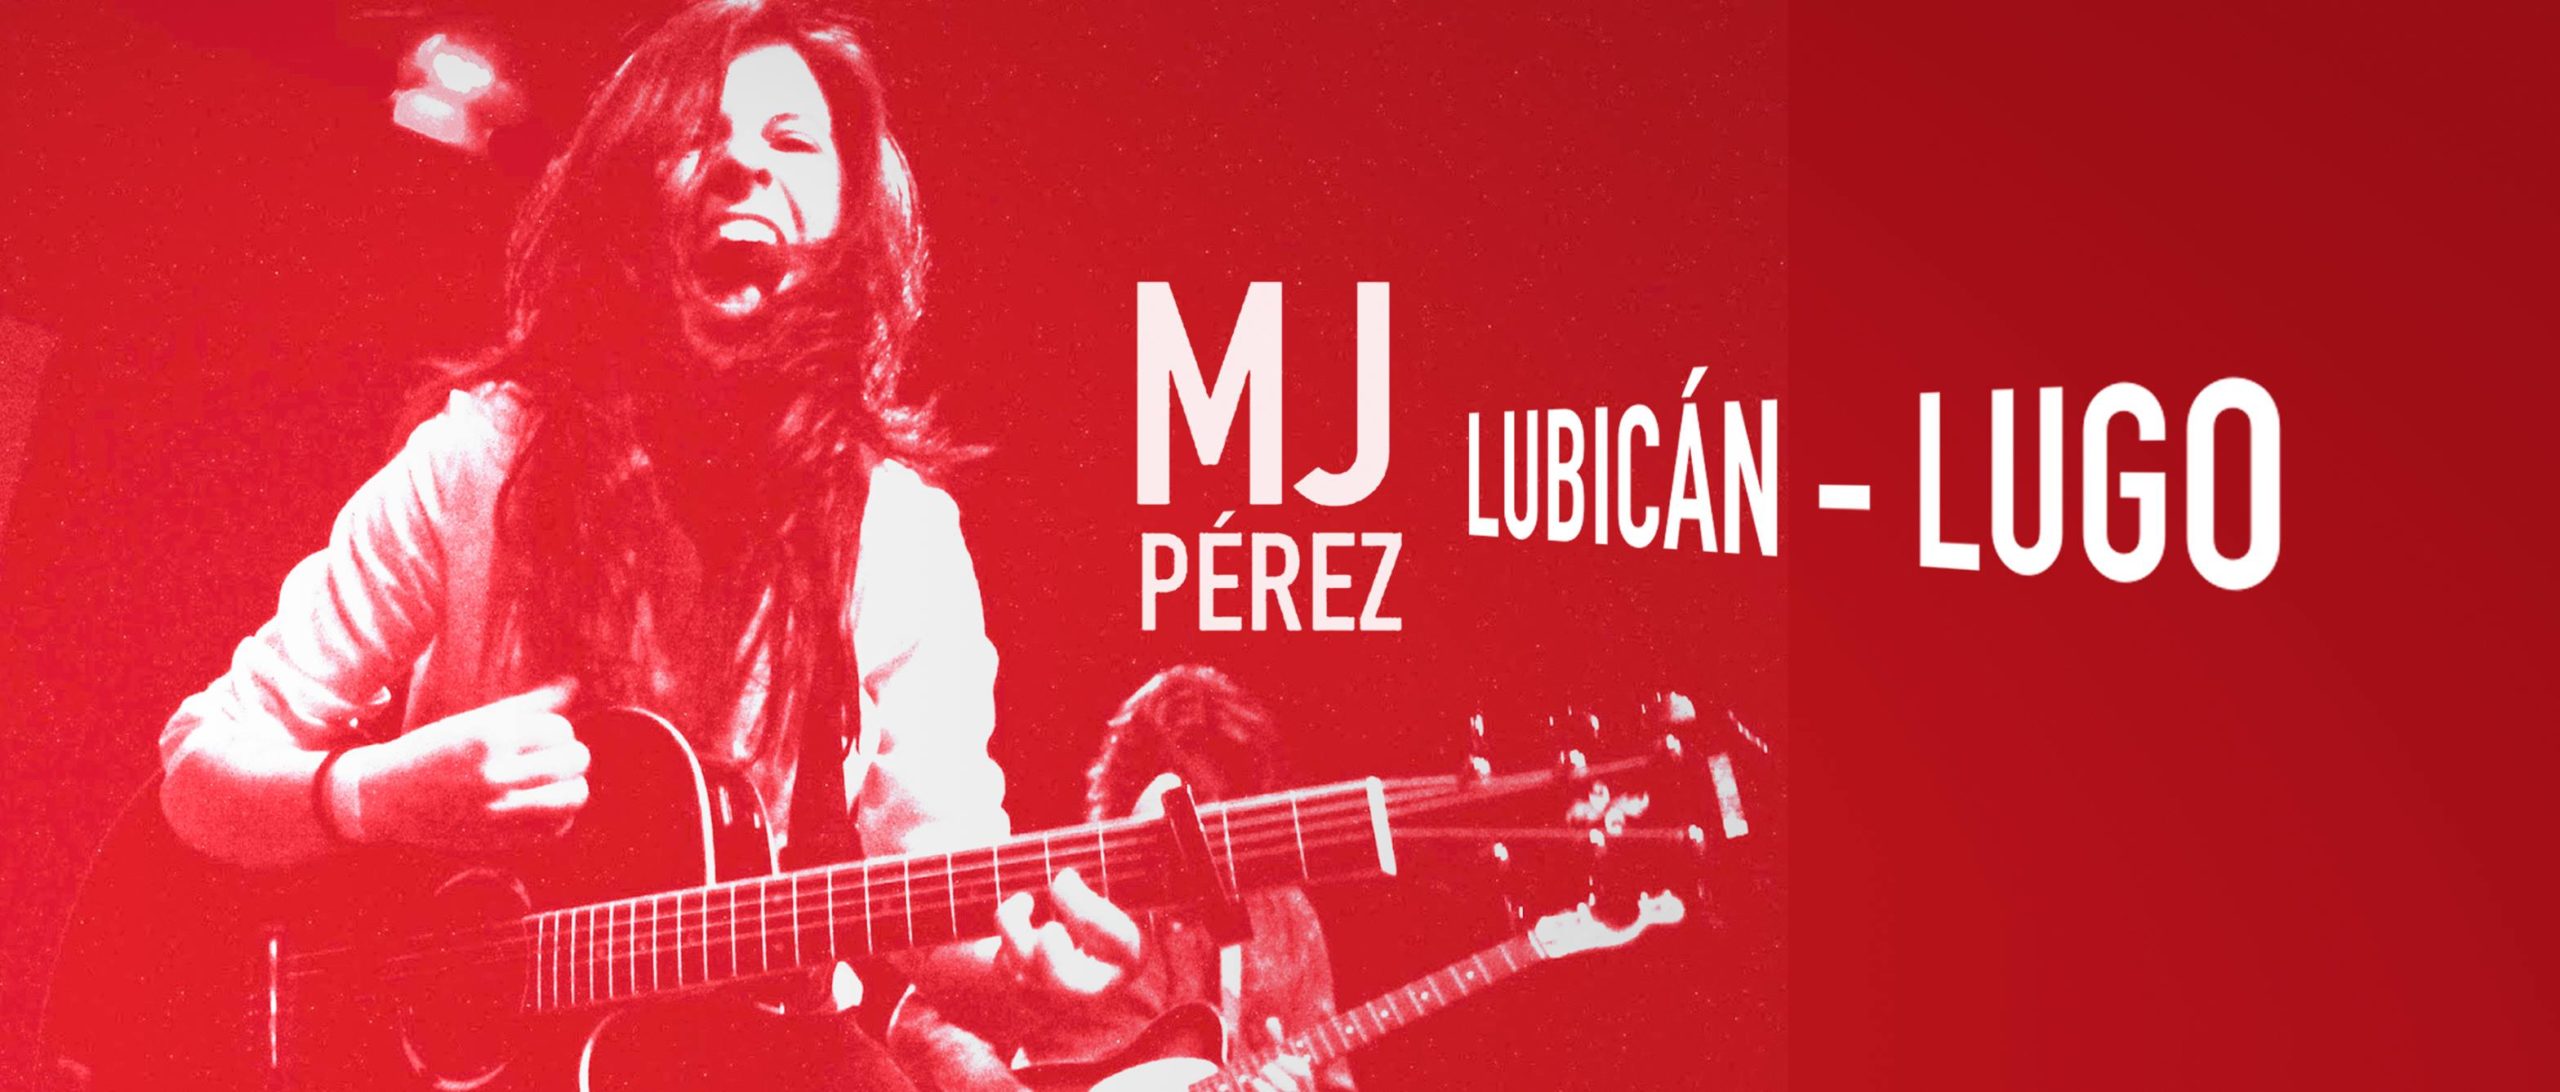 Concerto de MJ Pérez no Lubicán